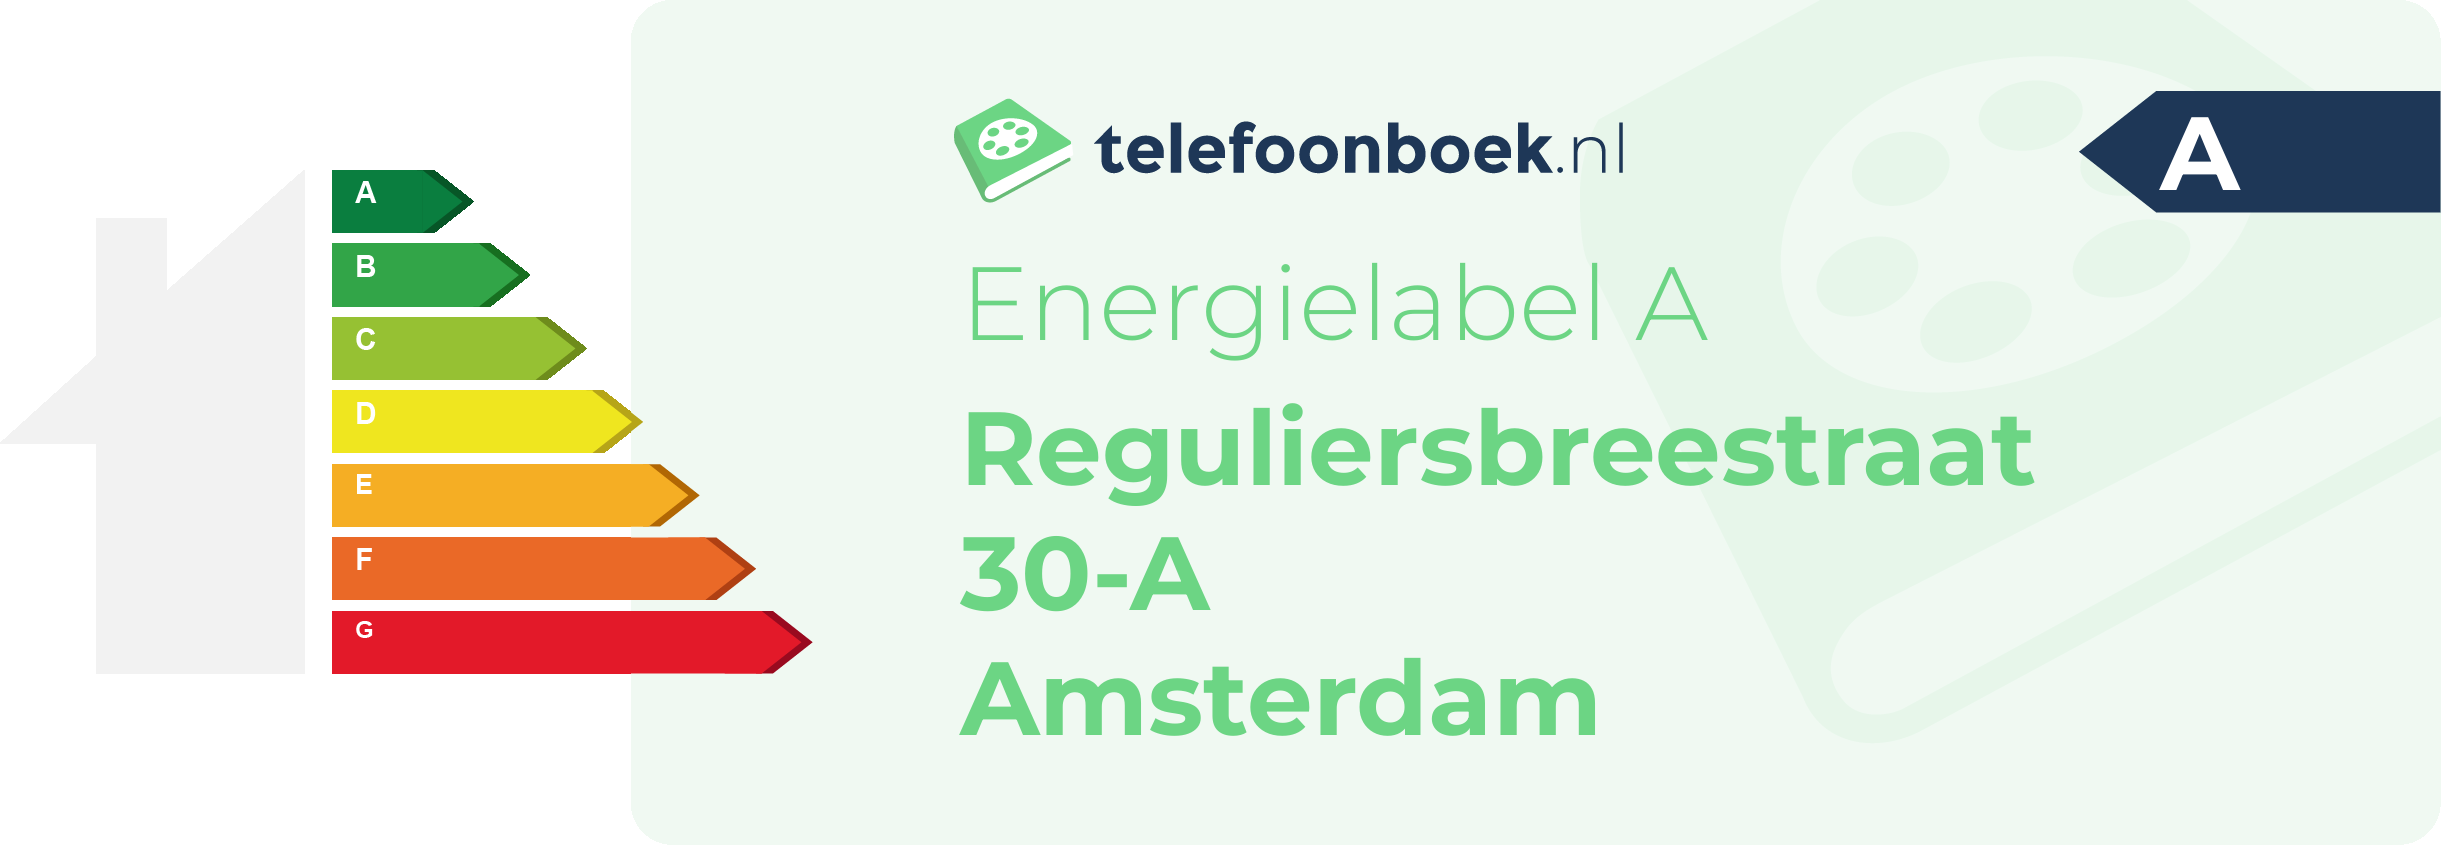 Energielabel Reguliersbreestraat 30-A Amsterdam